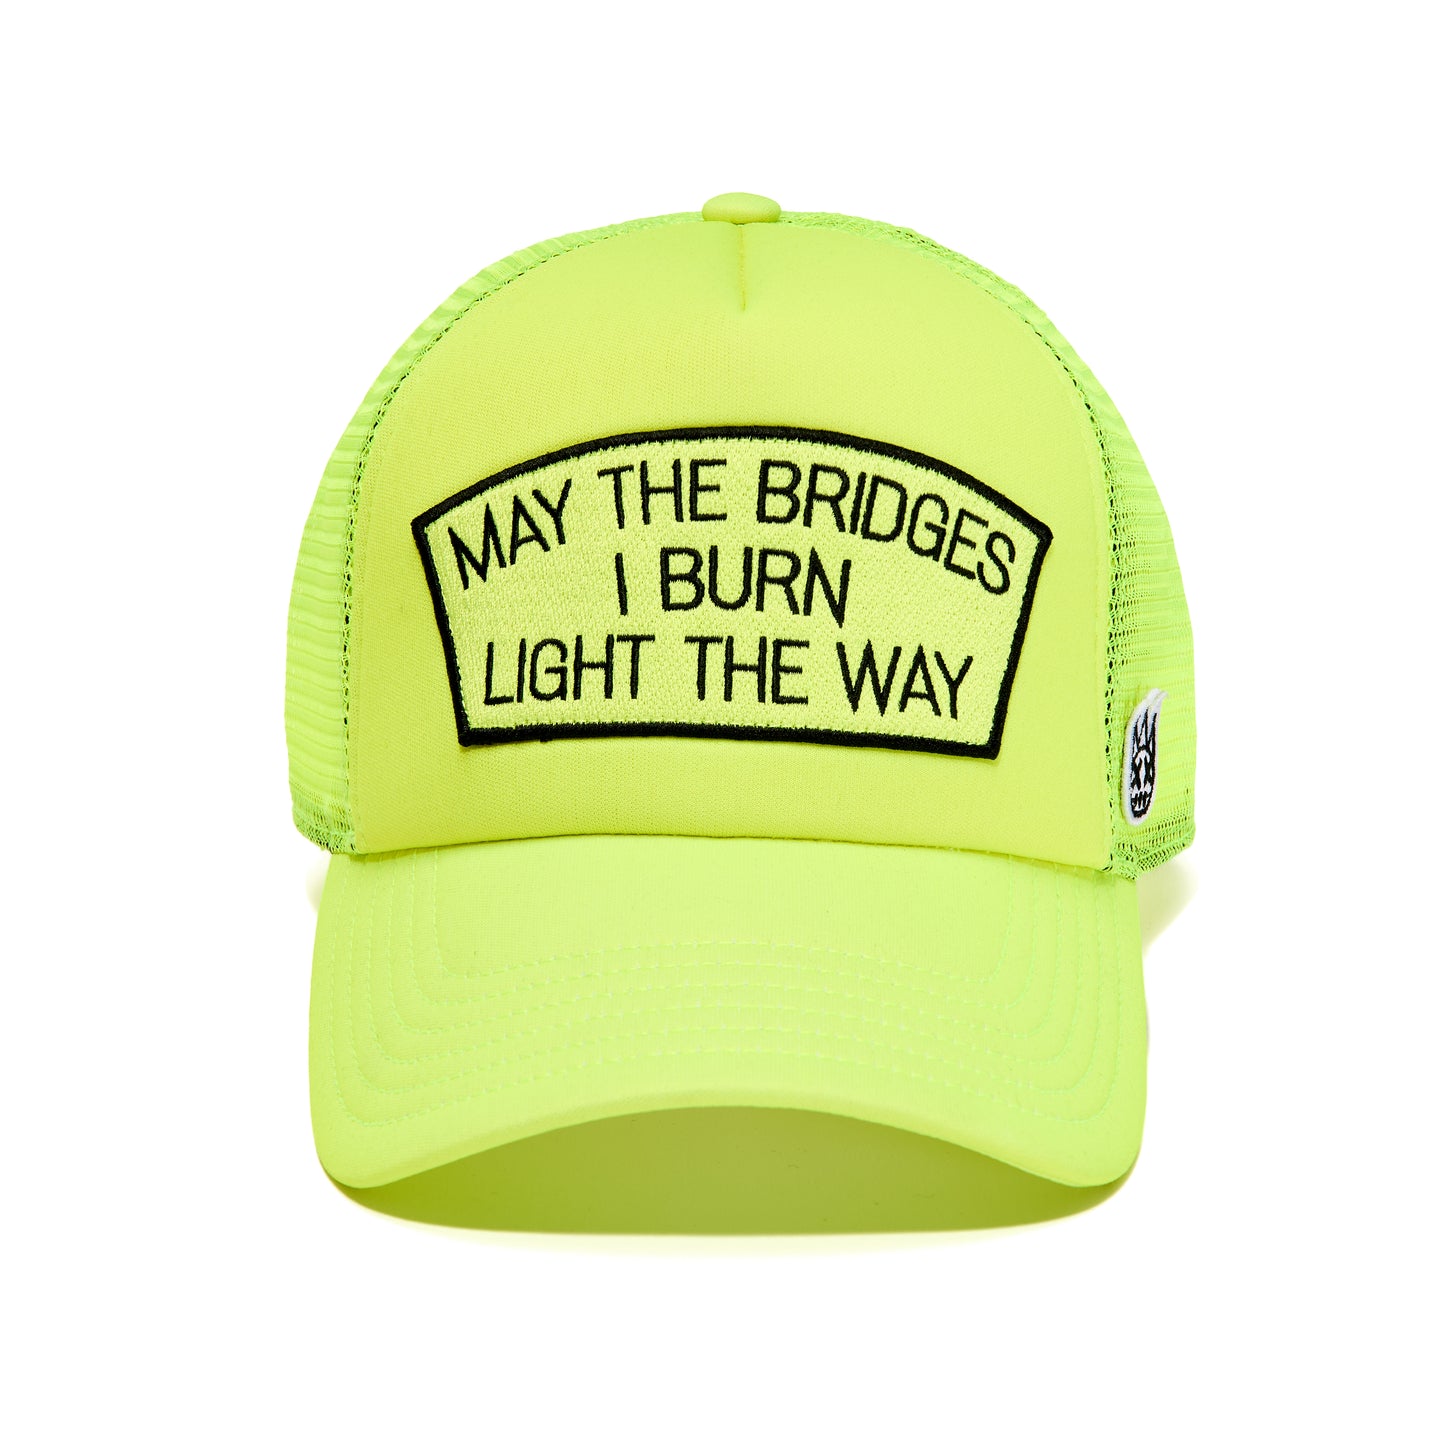 "MAY THE BRIDGES I BURN" MESH BACK TRUCKER HAT IN NEON YELLOW